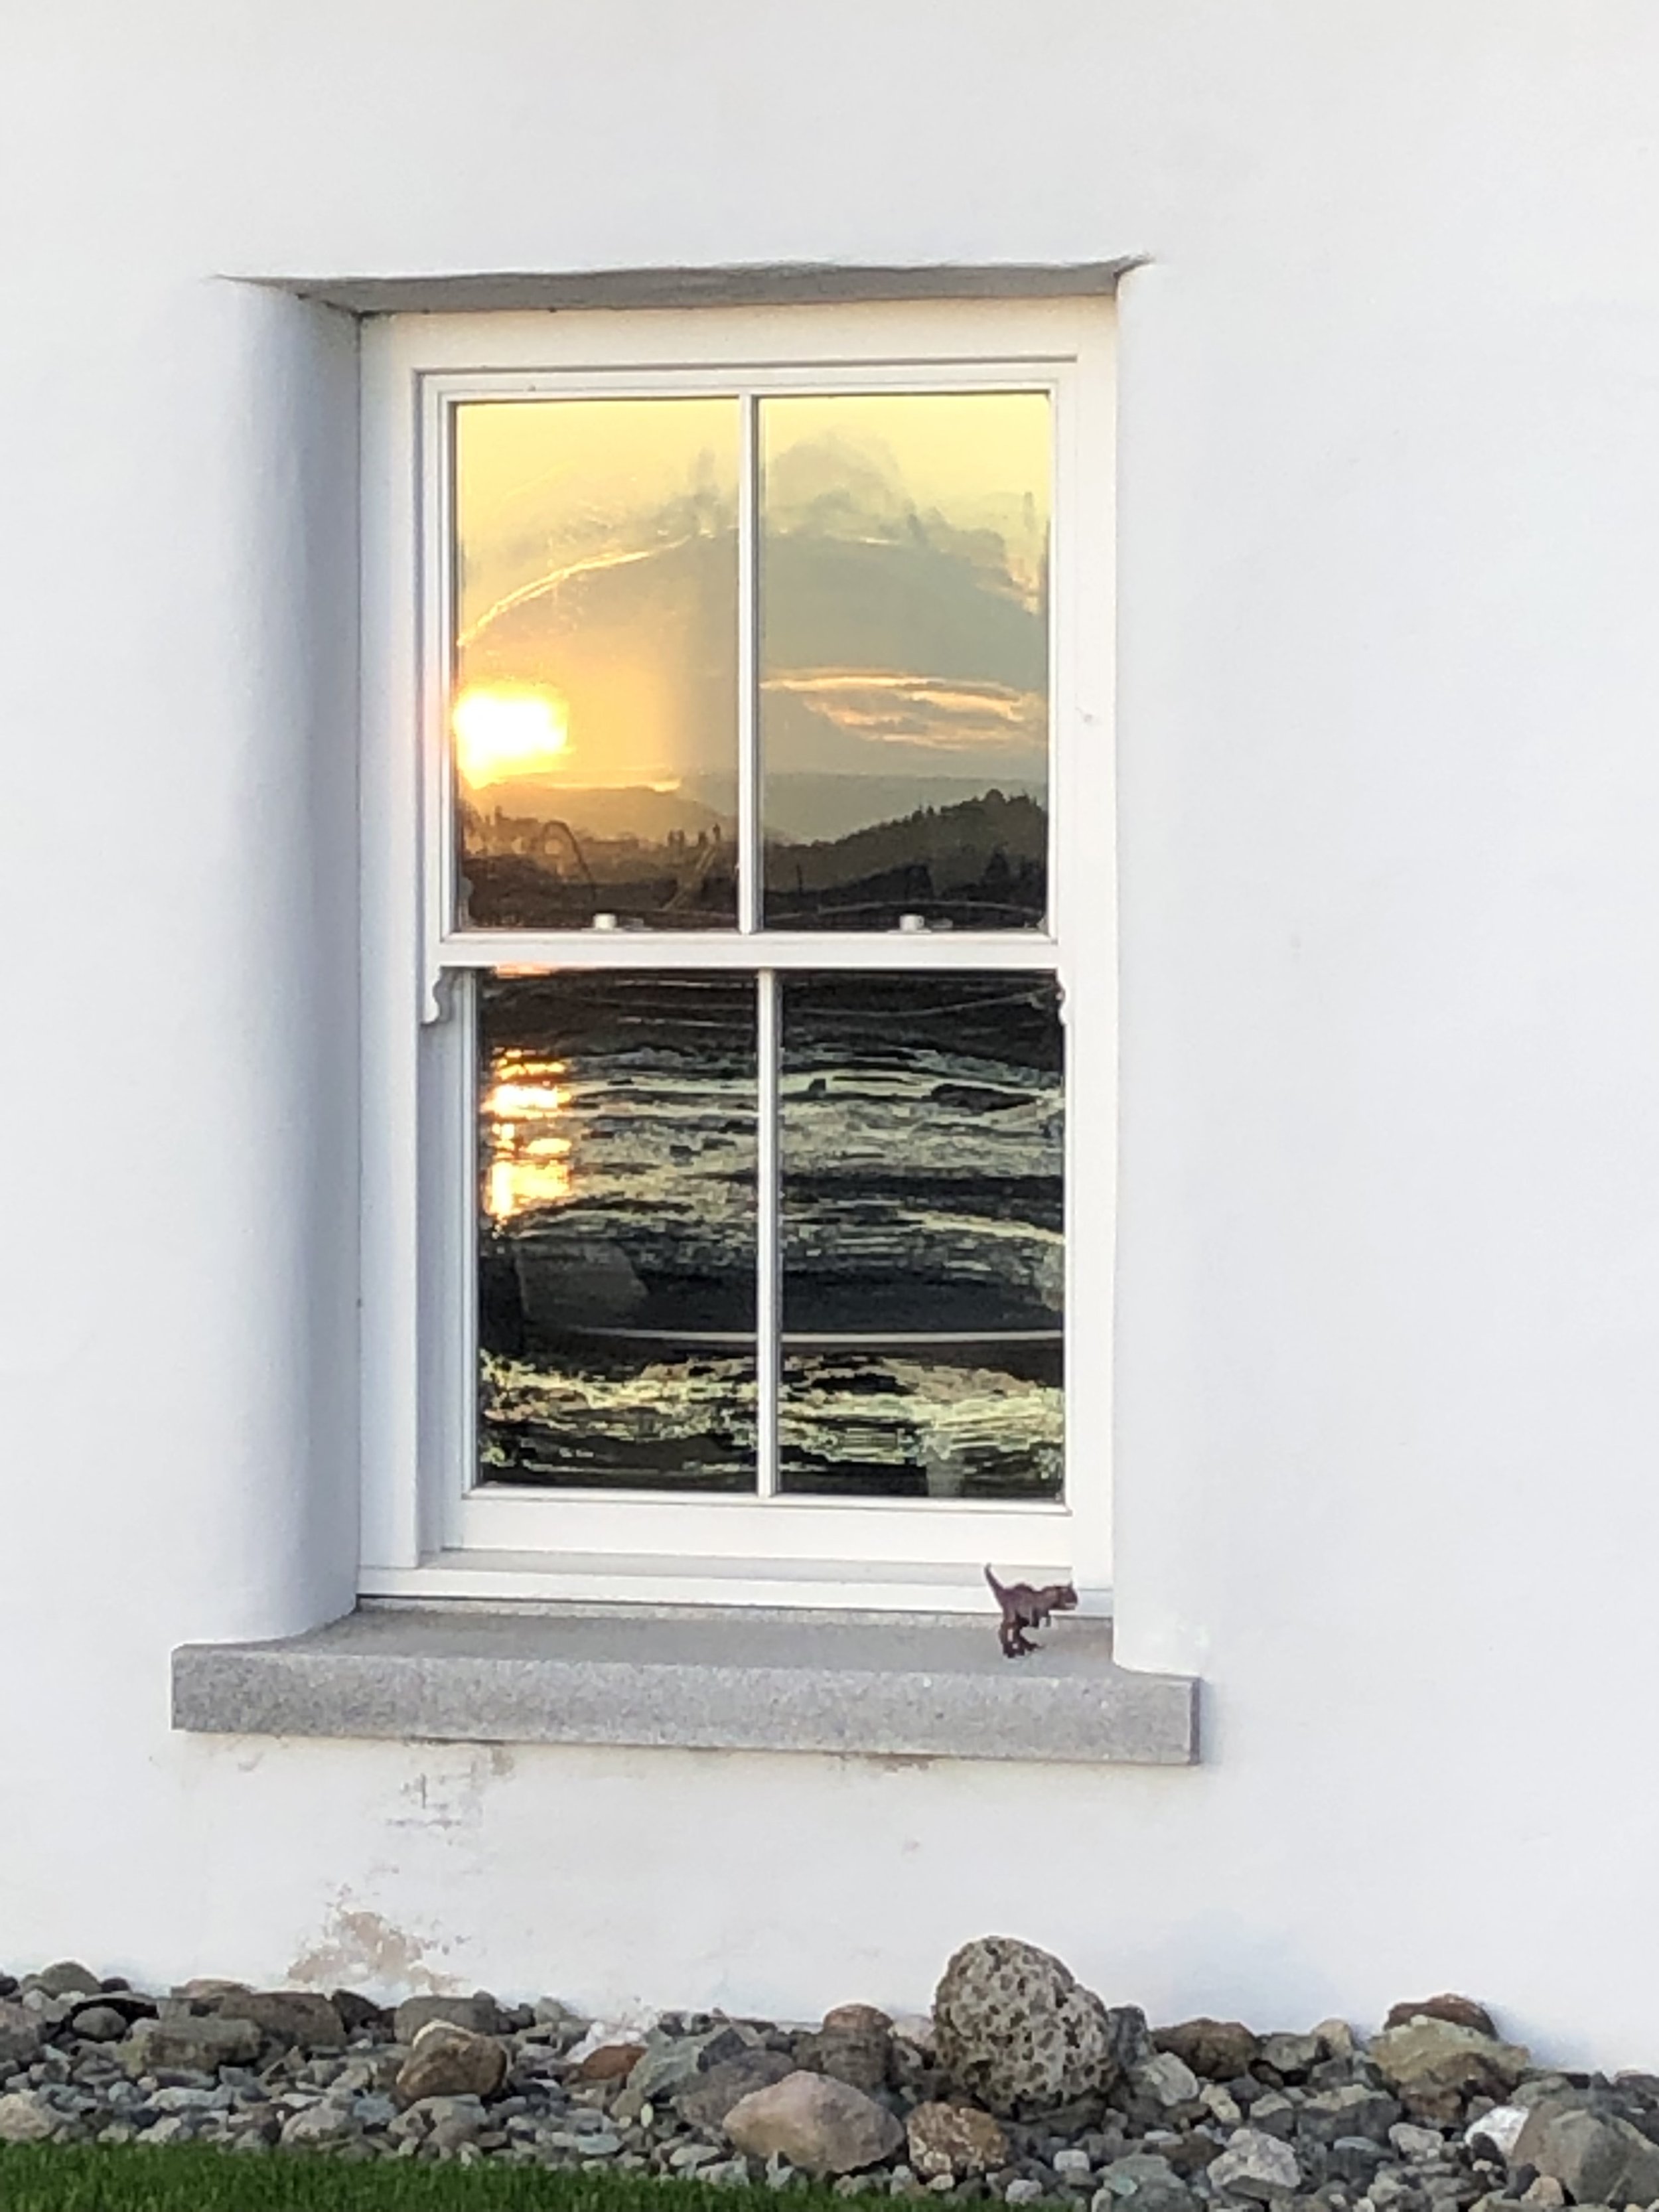 Evening Reflection by Rhonda Glasgow